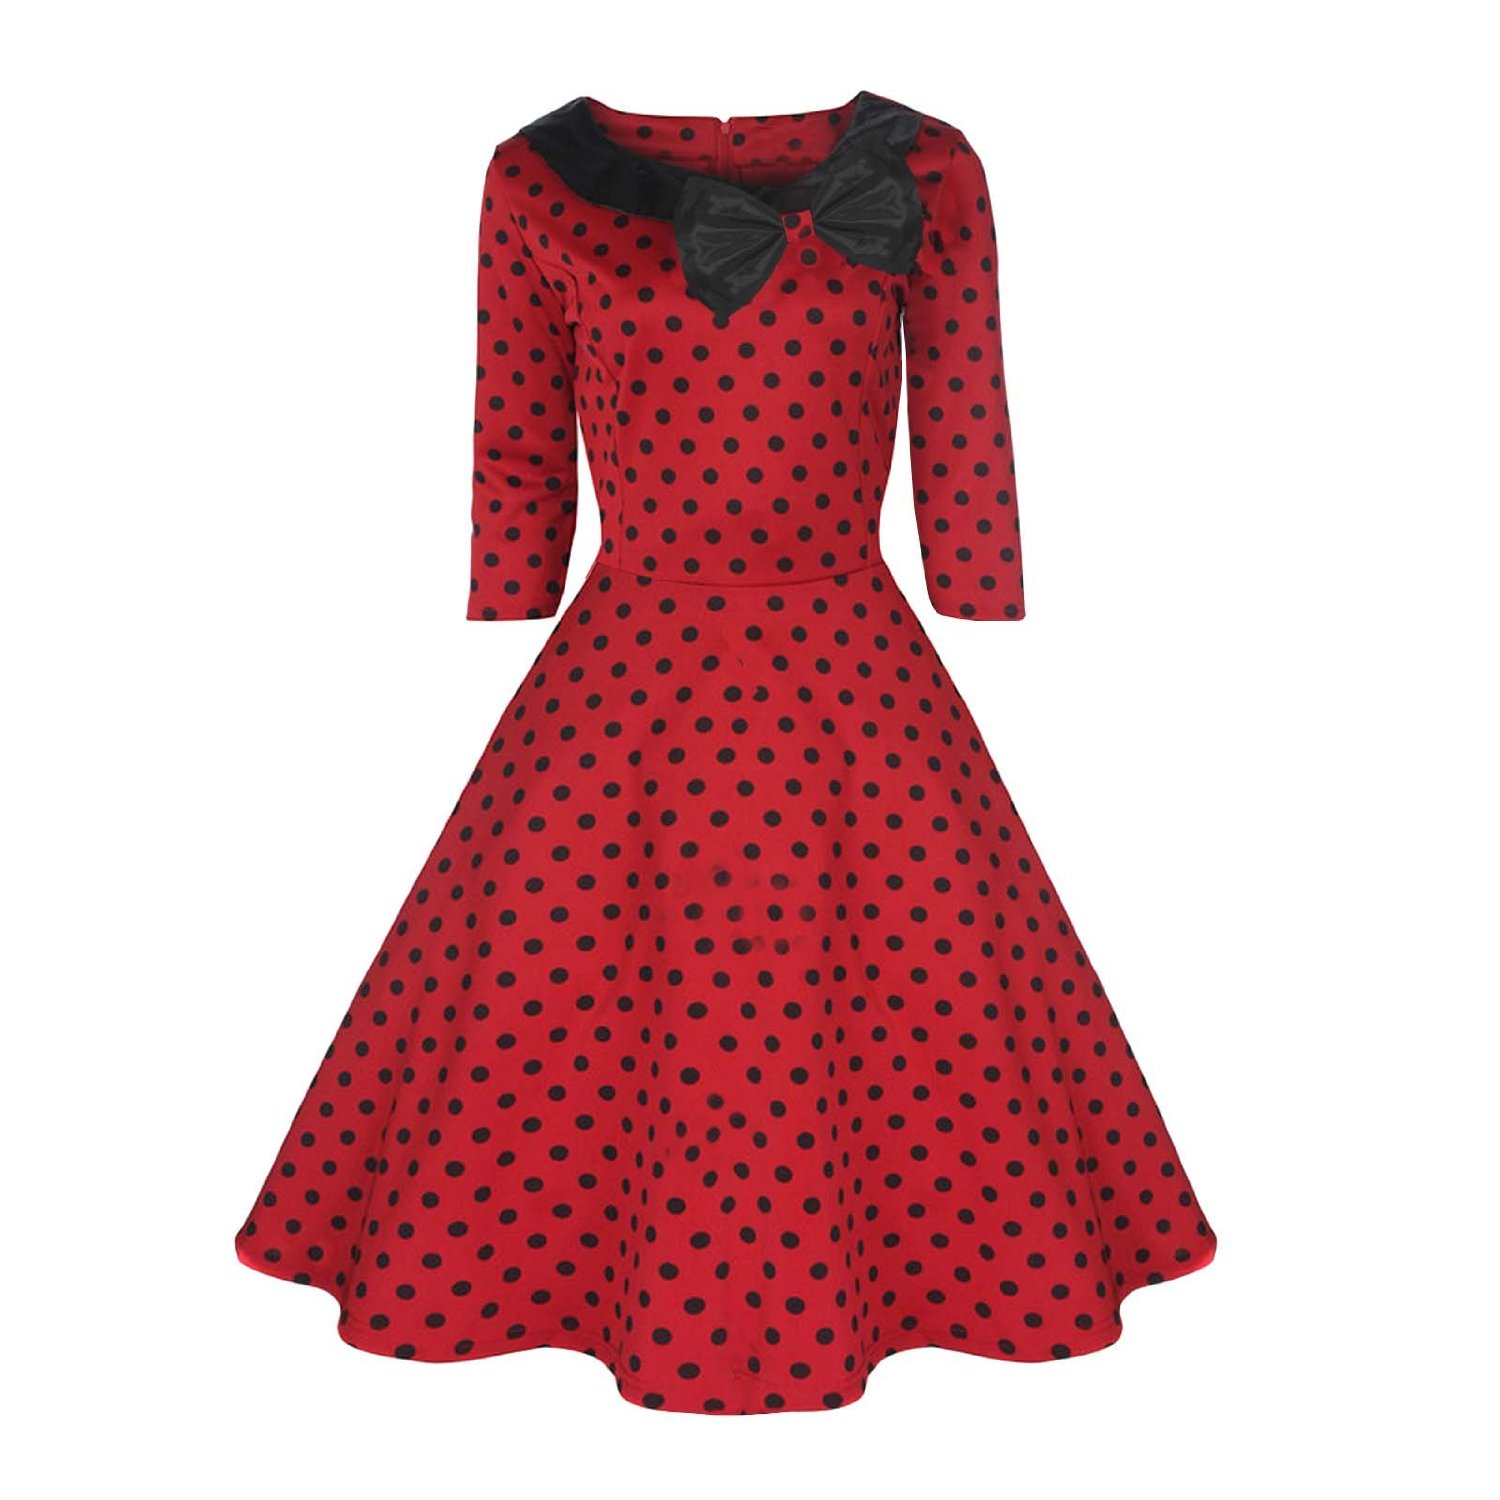 Rk58 Rockabilly Polka Dot Parisian Swing Dress Black Red 50s Retro Pin Up Plus Ebay